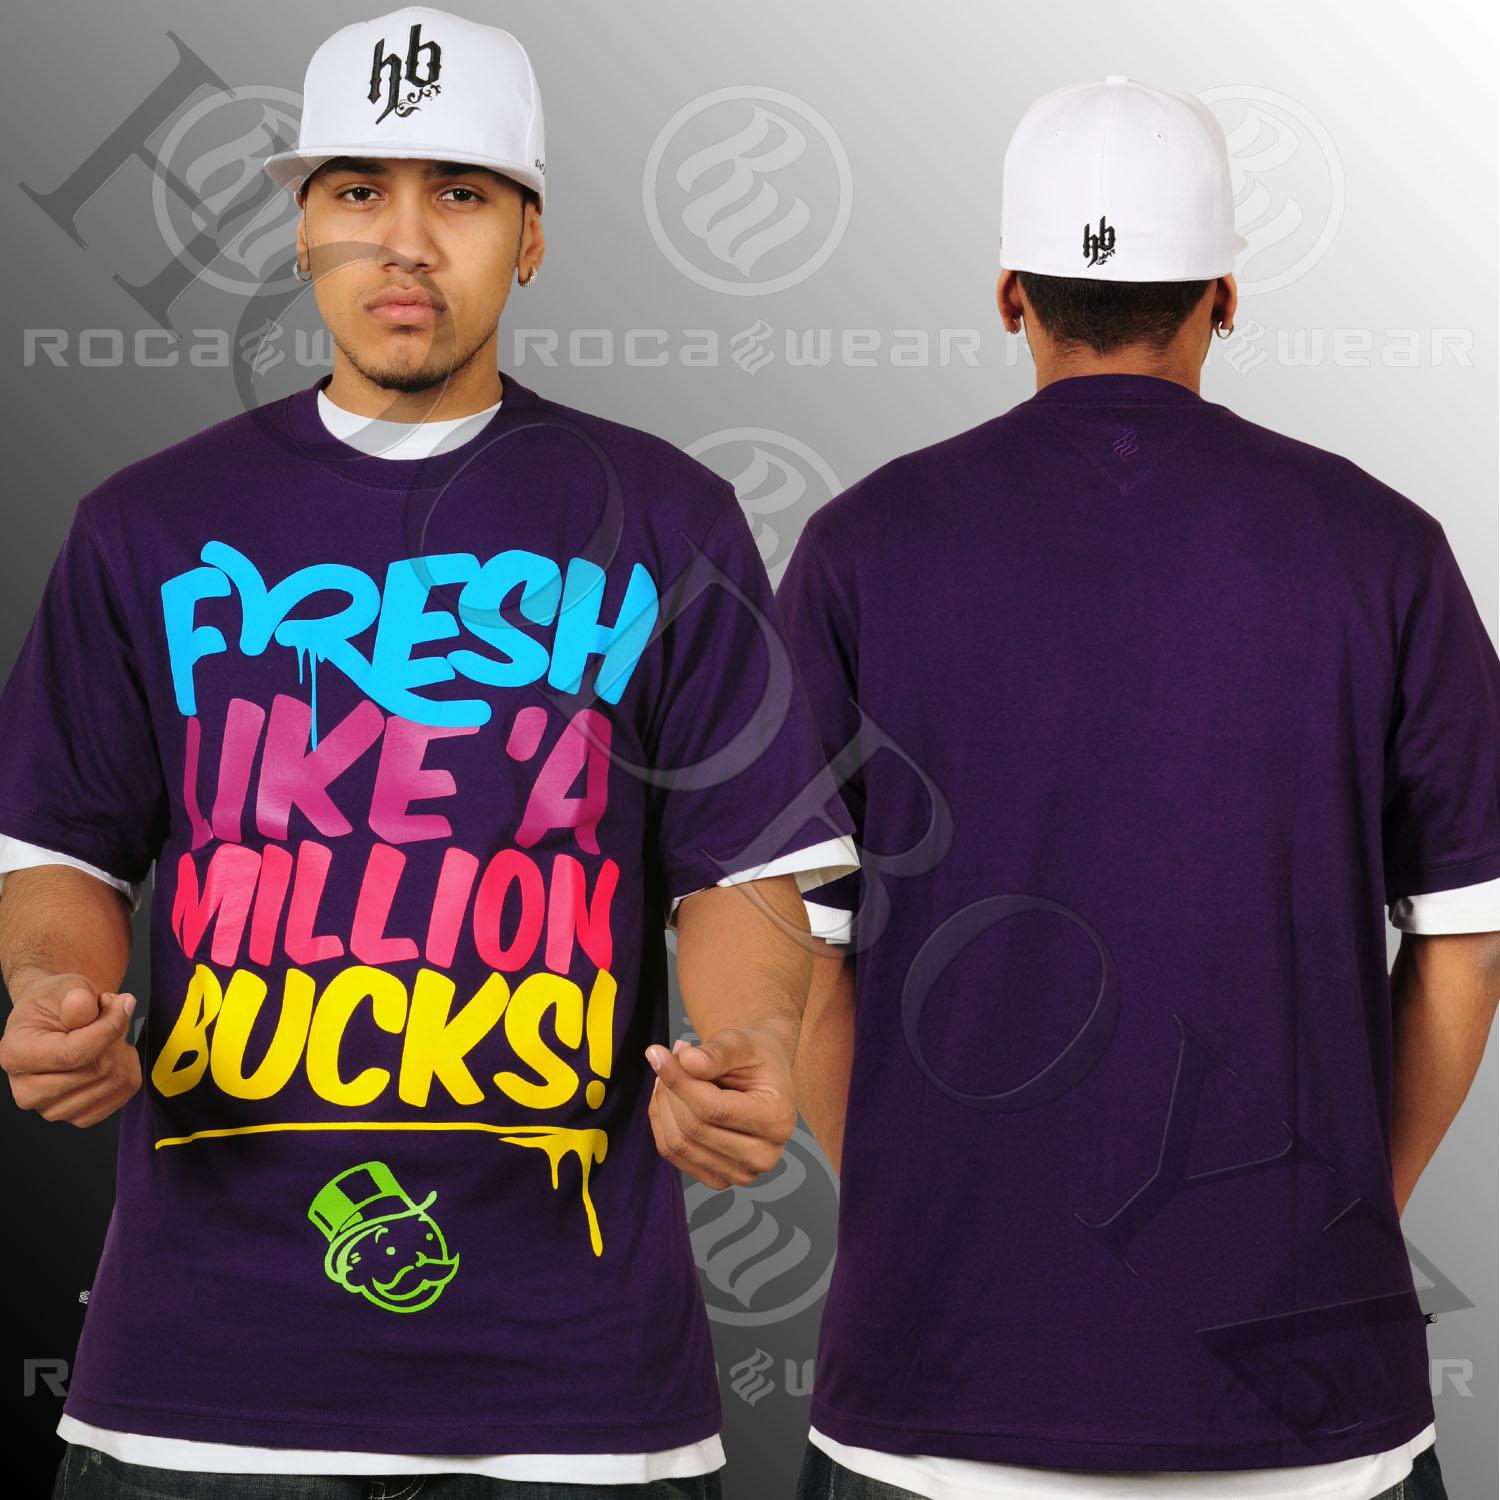 Foto Rocawear Bucks Camisetas Púrpura